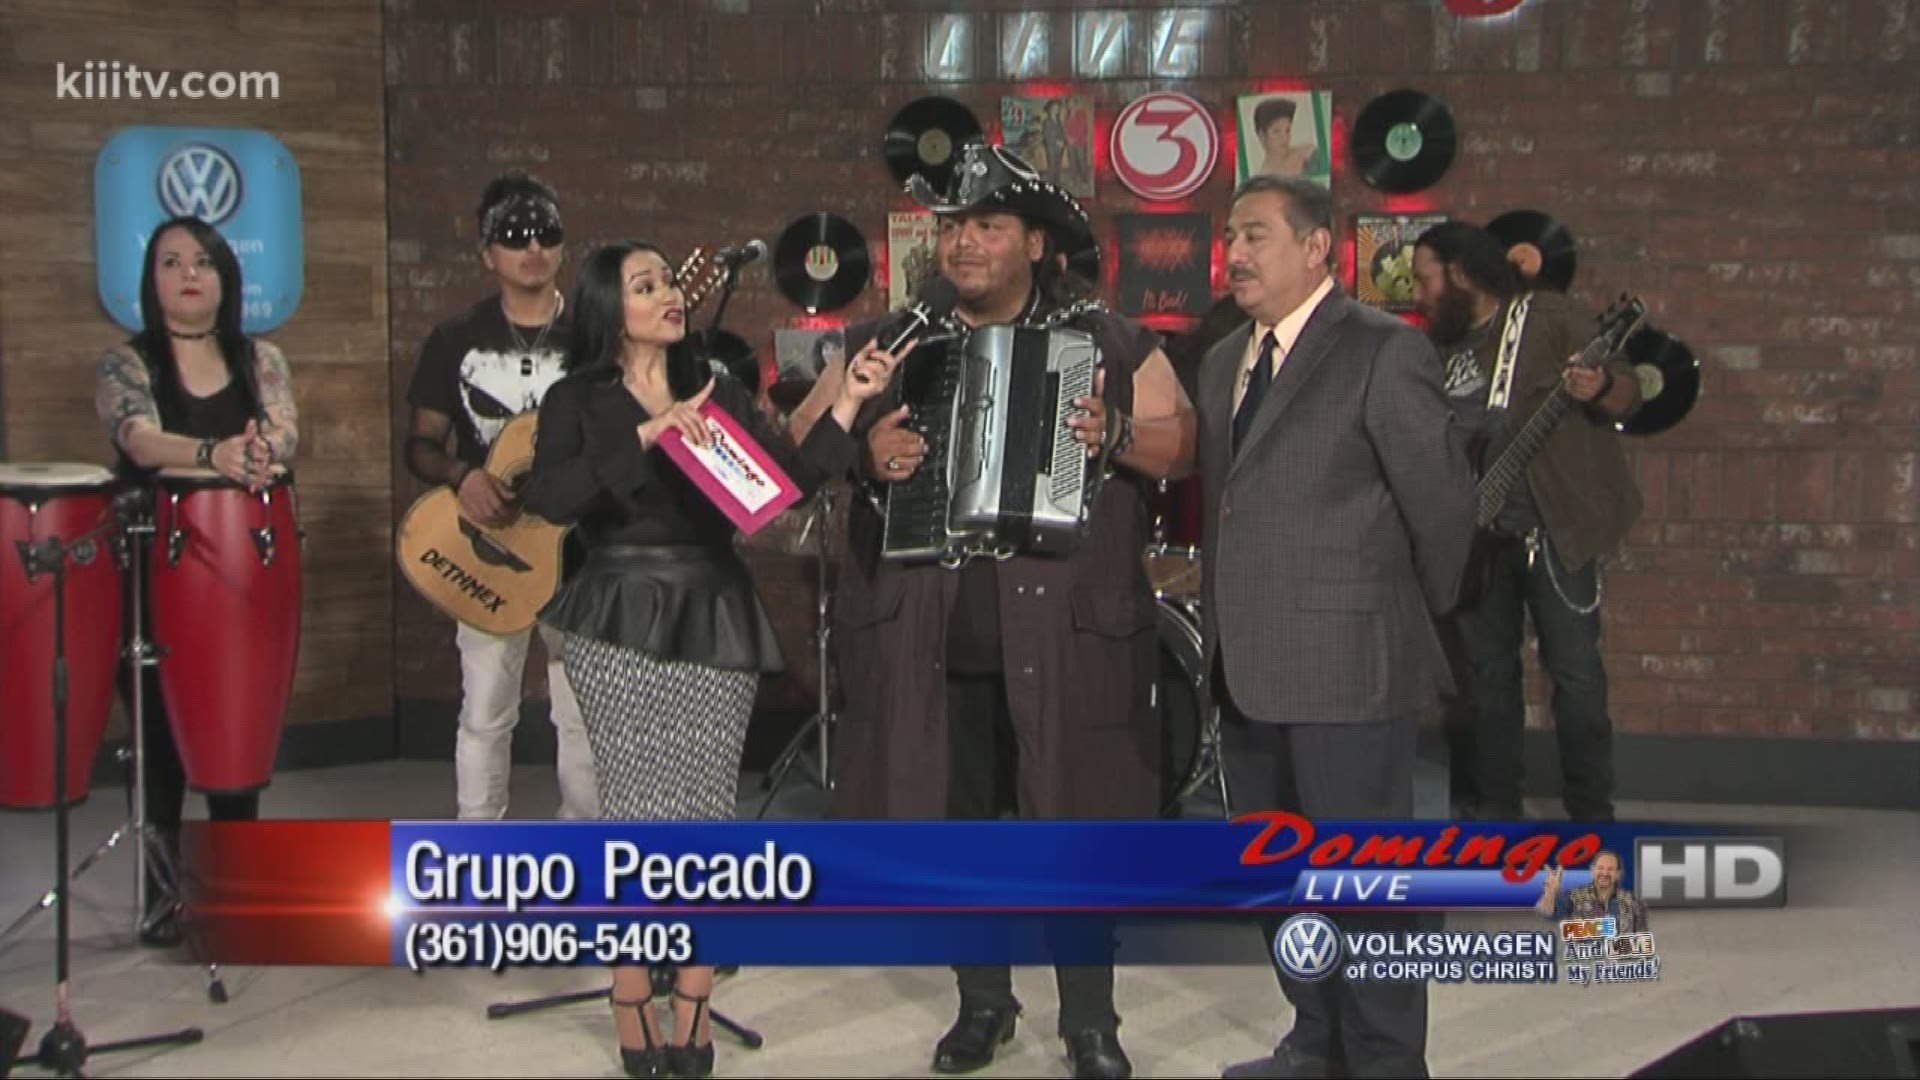 Grupo Pecado Interviewing with Barbi Leo and Rudy Trevino on Domingo Live.